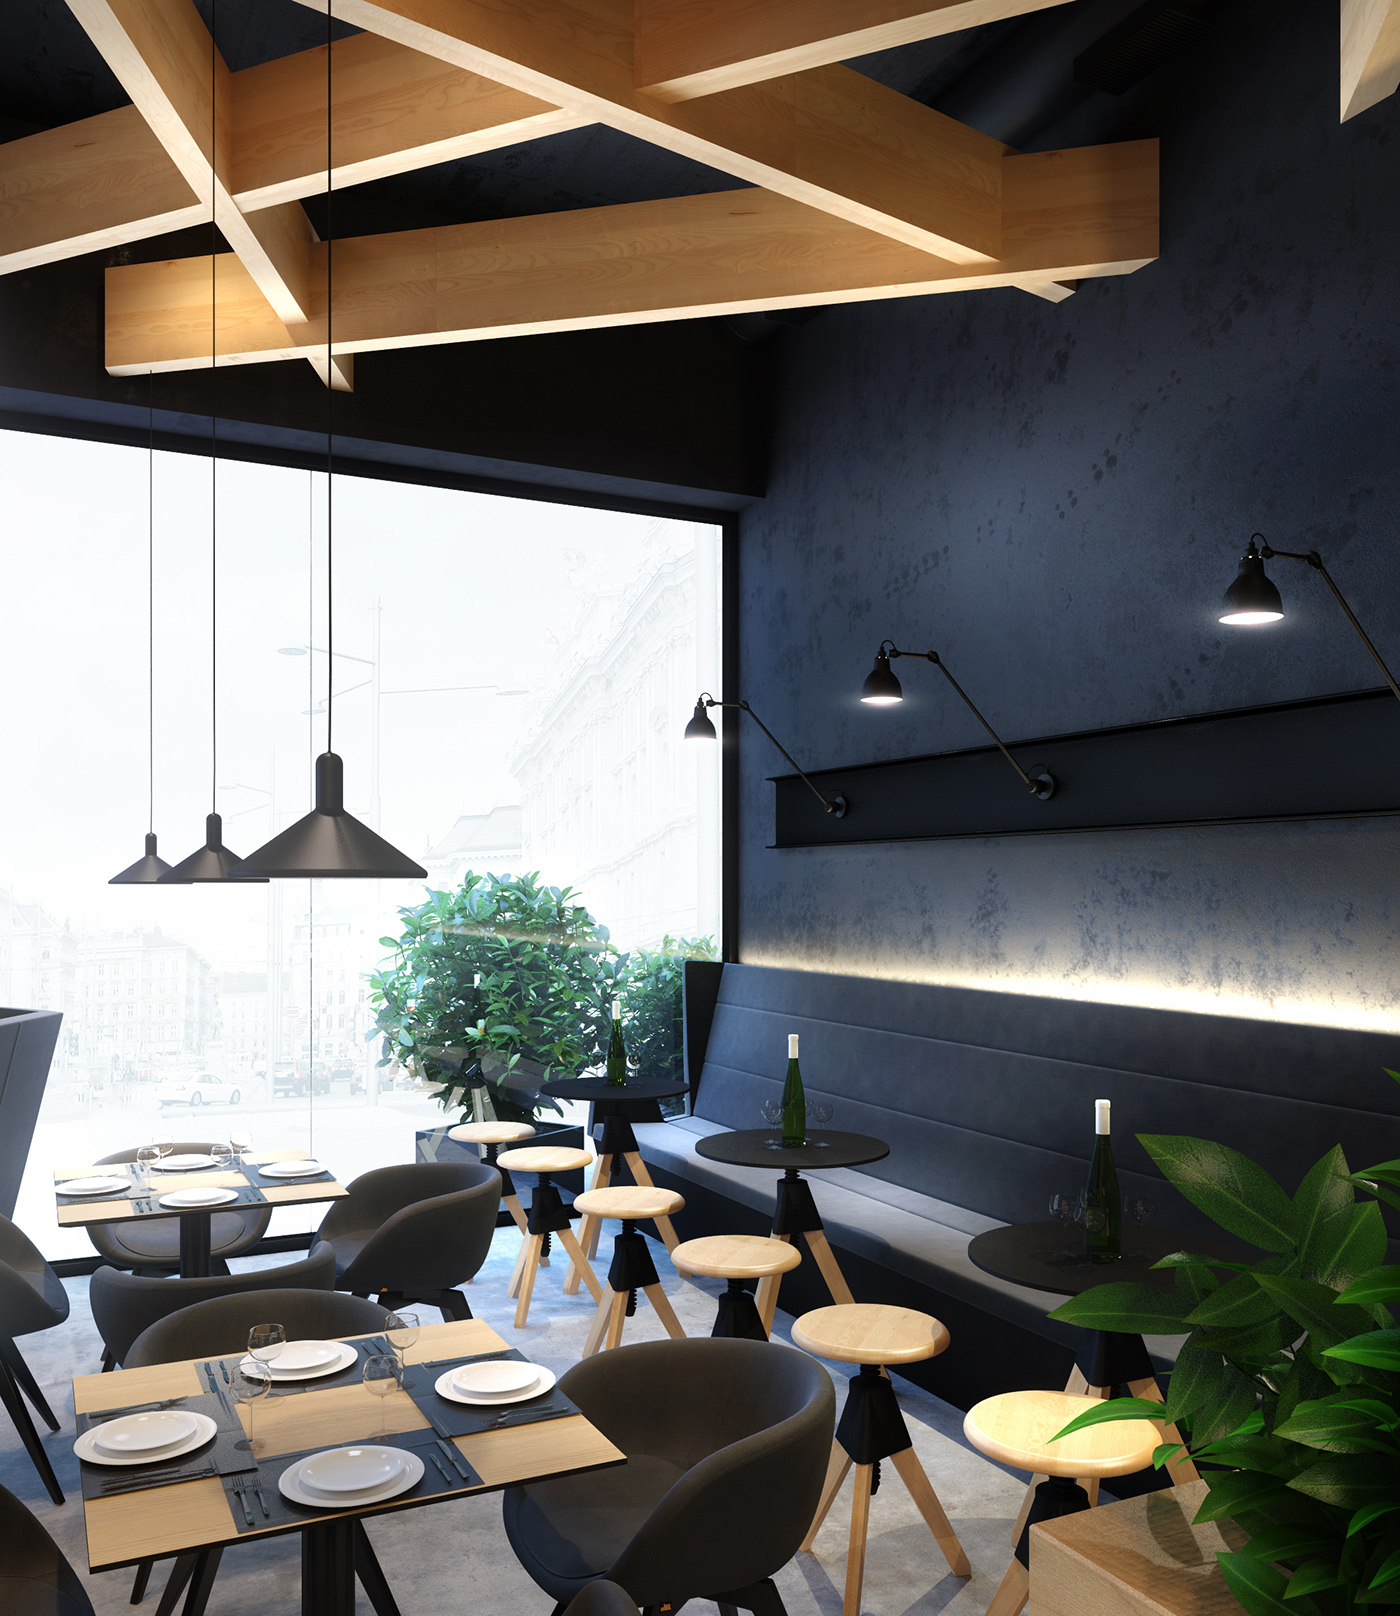 caffee design visualization 3D Bristol rendering art restaurant cafe bar